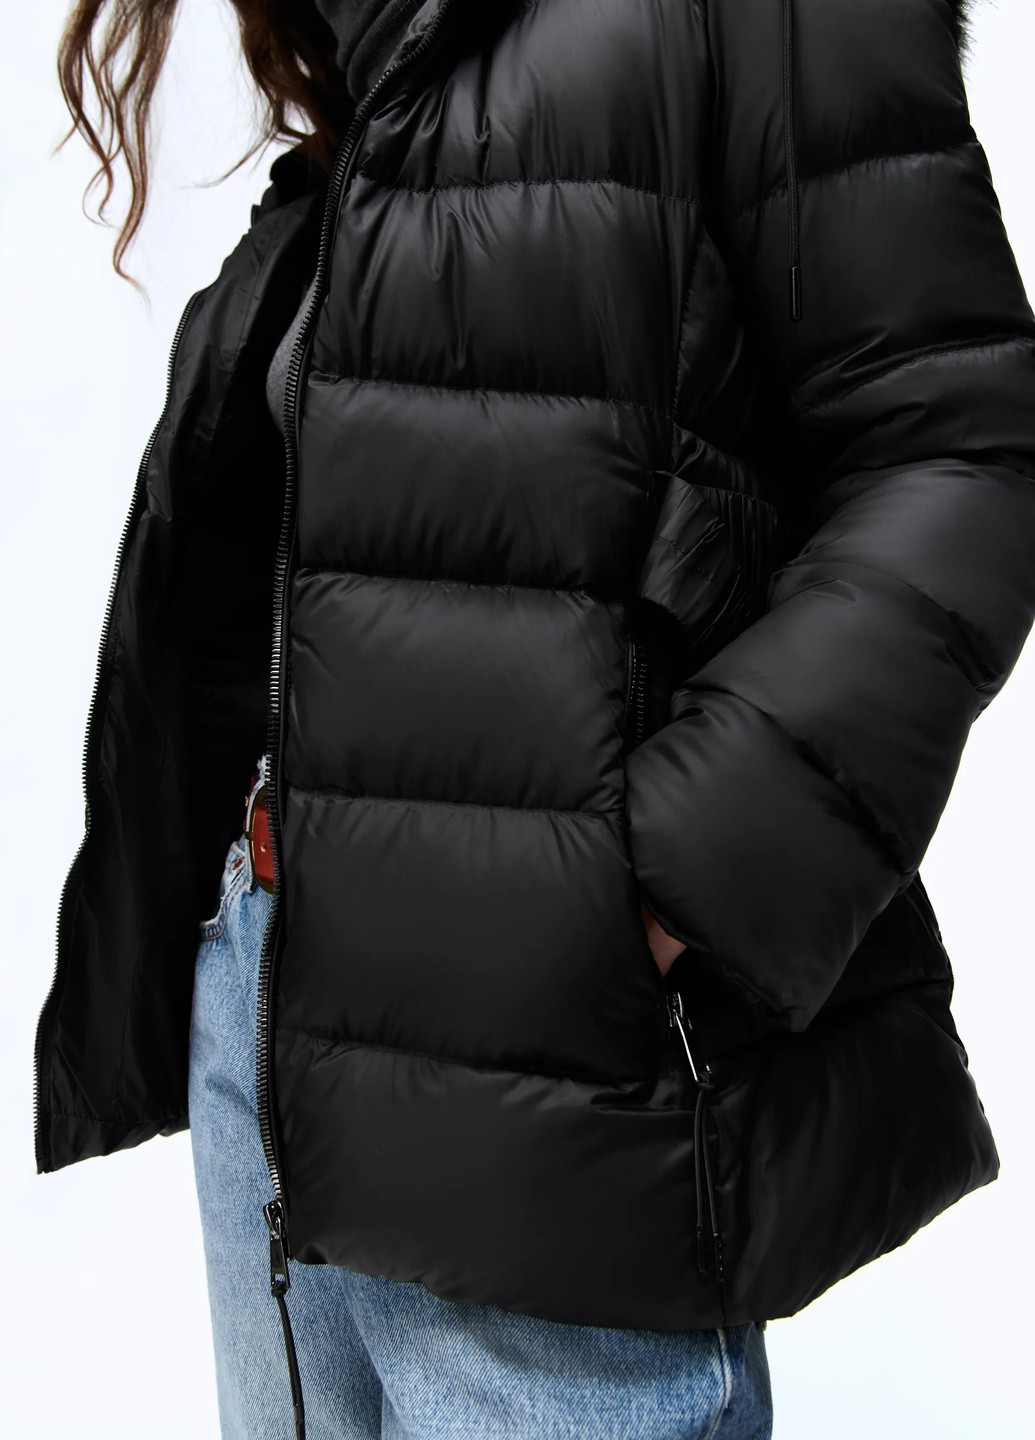 Черный зимний Пуховик аляска Zara